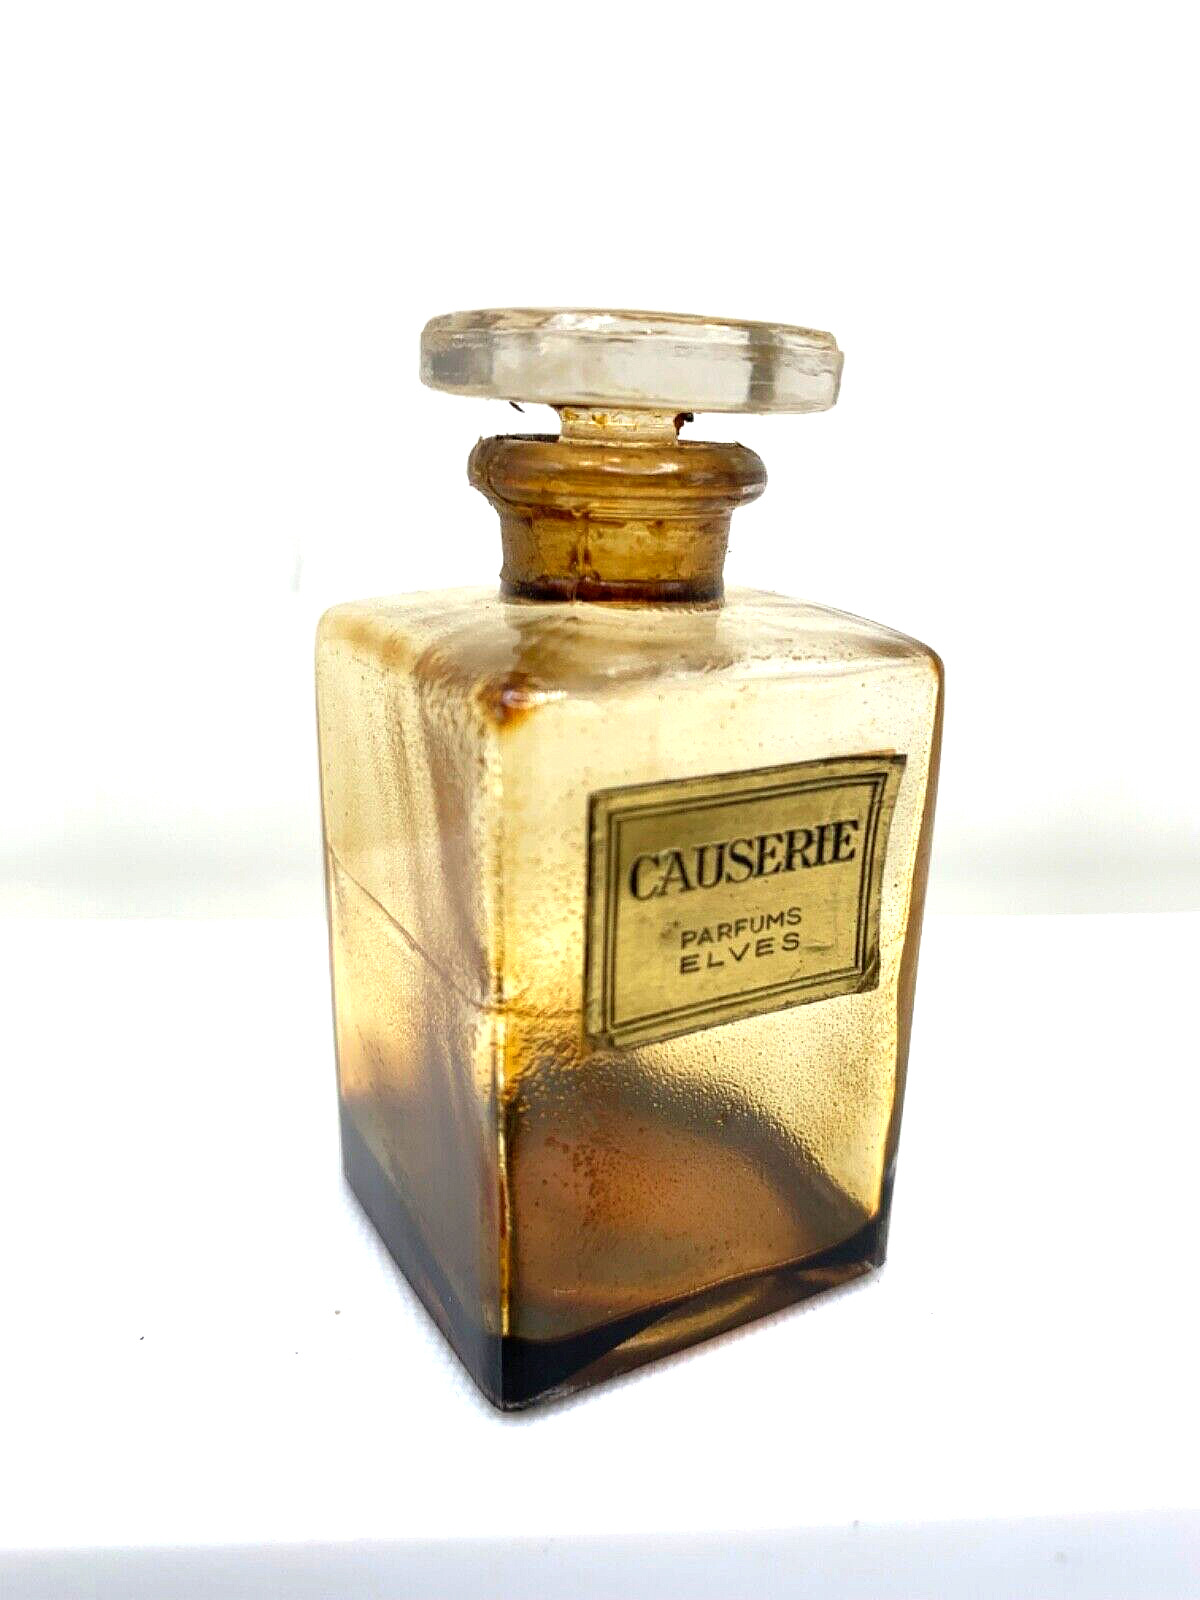 Hard to find  Vintage perfume bottle.  Causerie by Elves, Paris.  1930s.  1 oz.